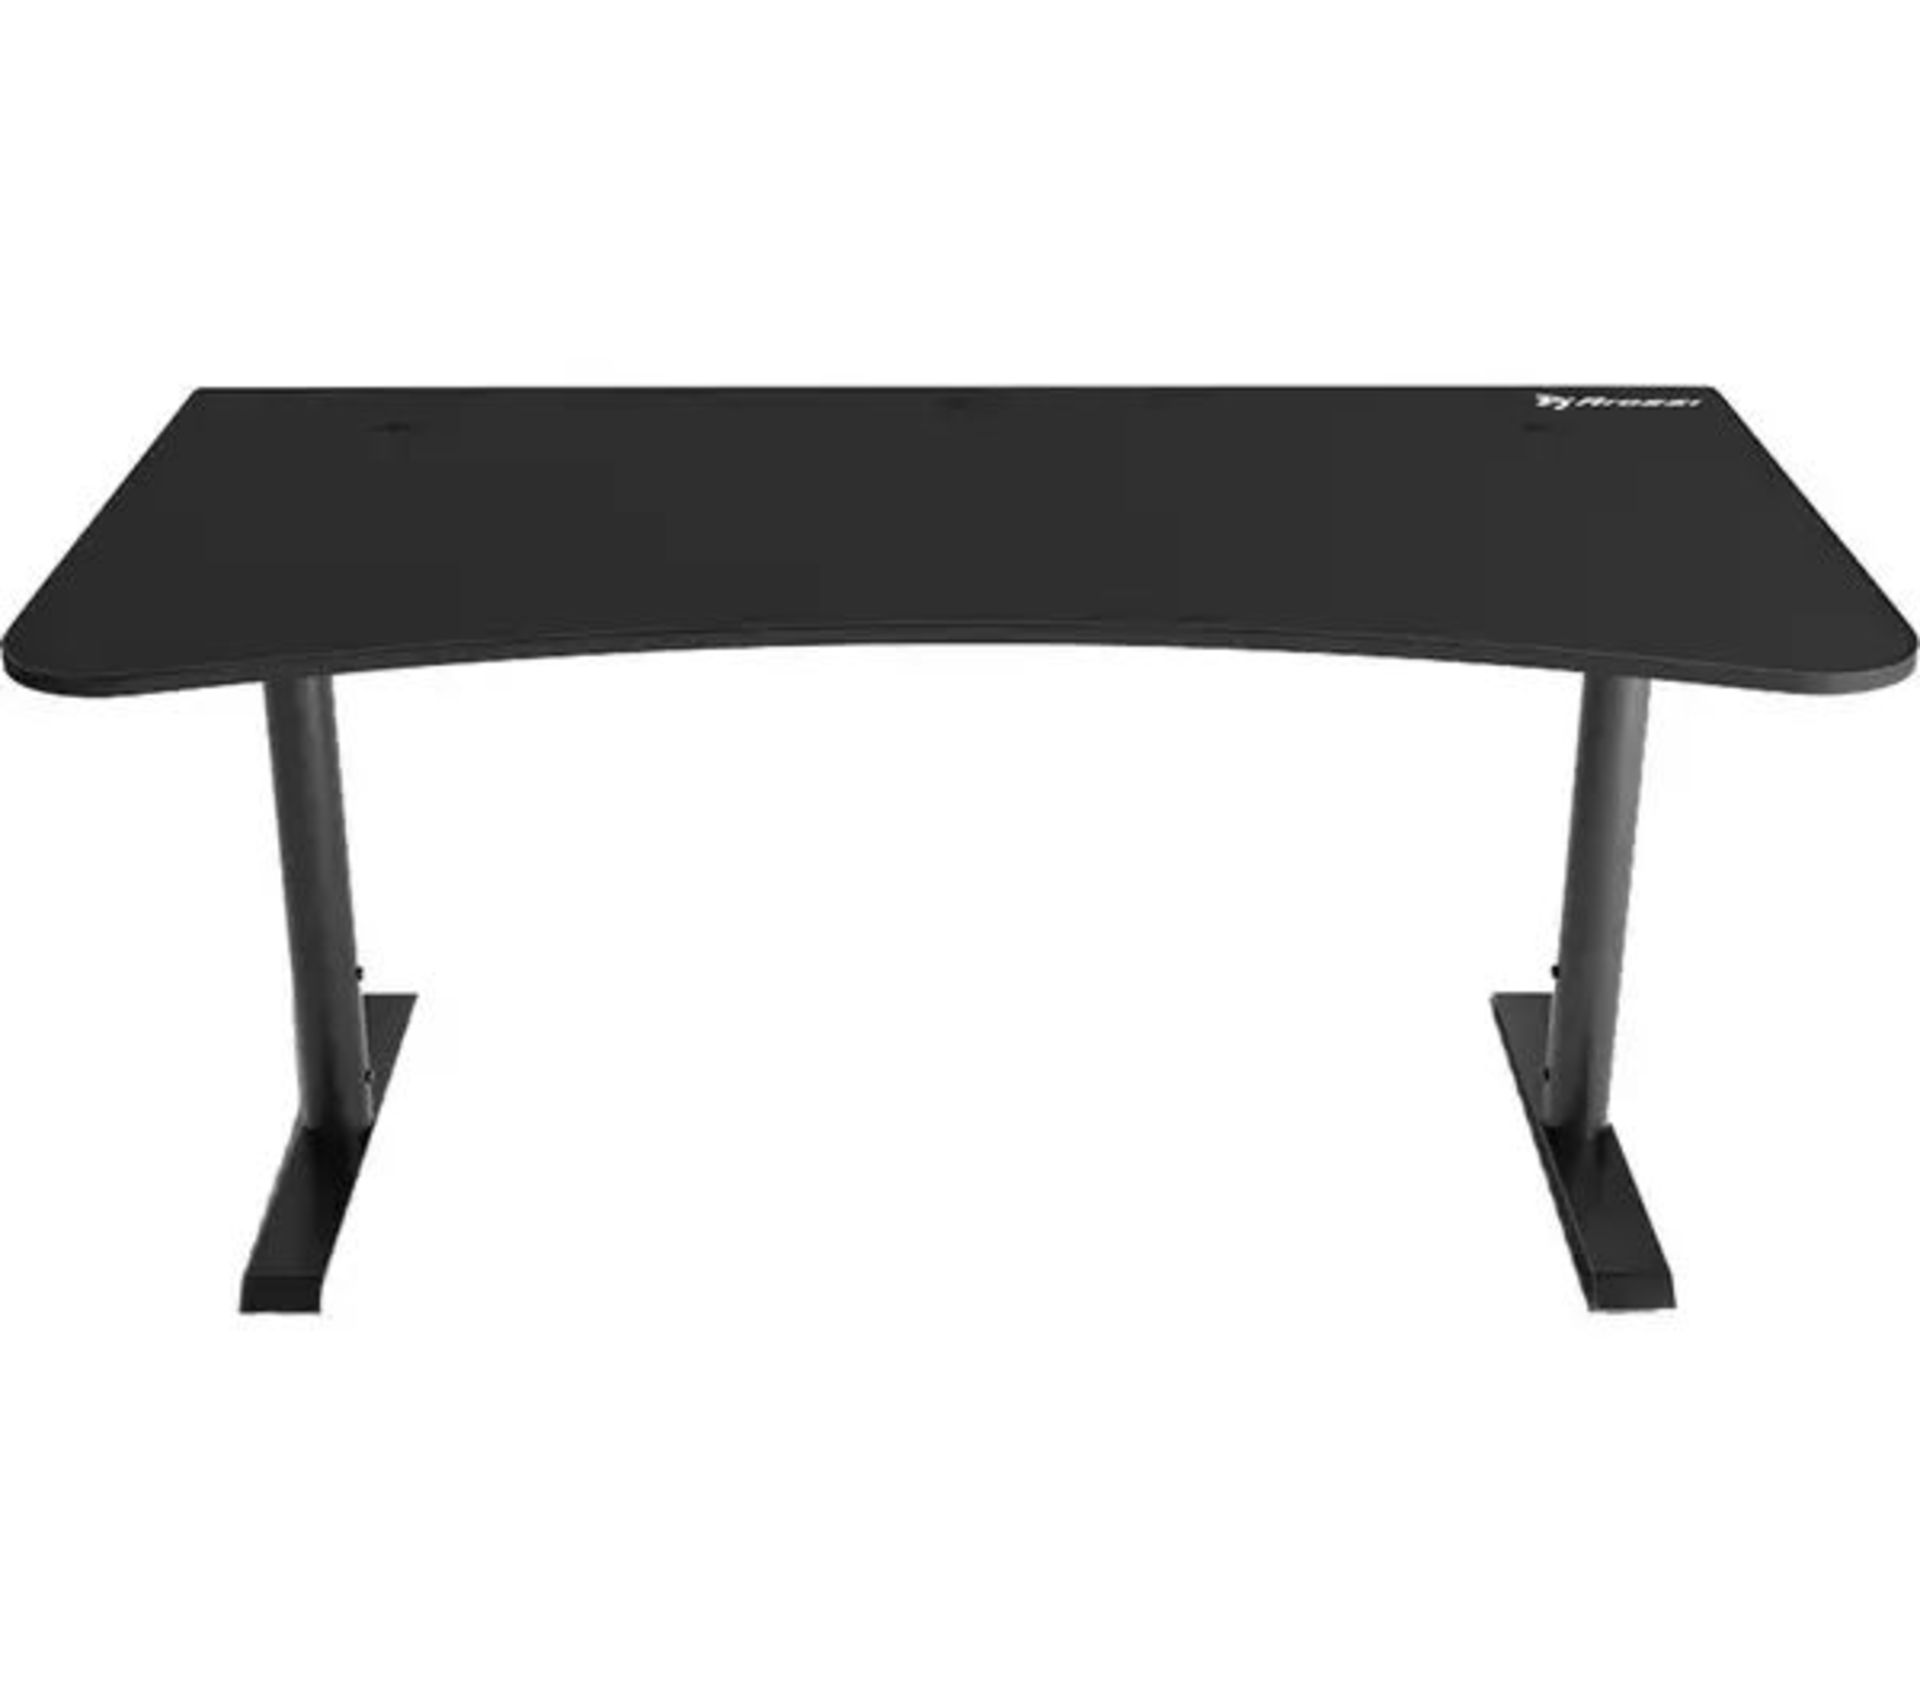 AROZZI Arena Gaming Desk - Pure Black. - P1. RRP £347.00. The Arozzi Arena Gaming Desk has a